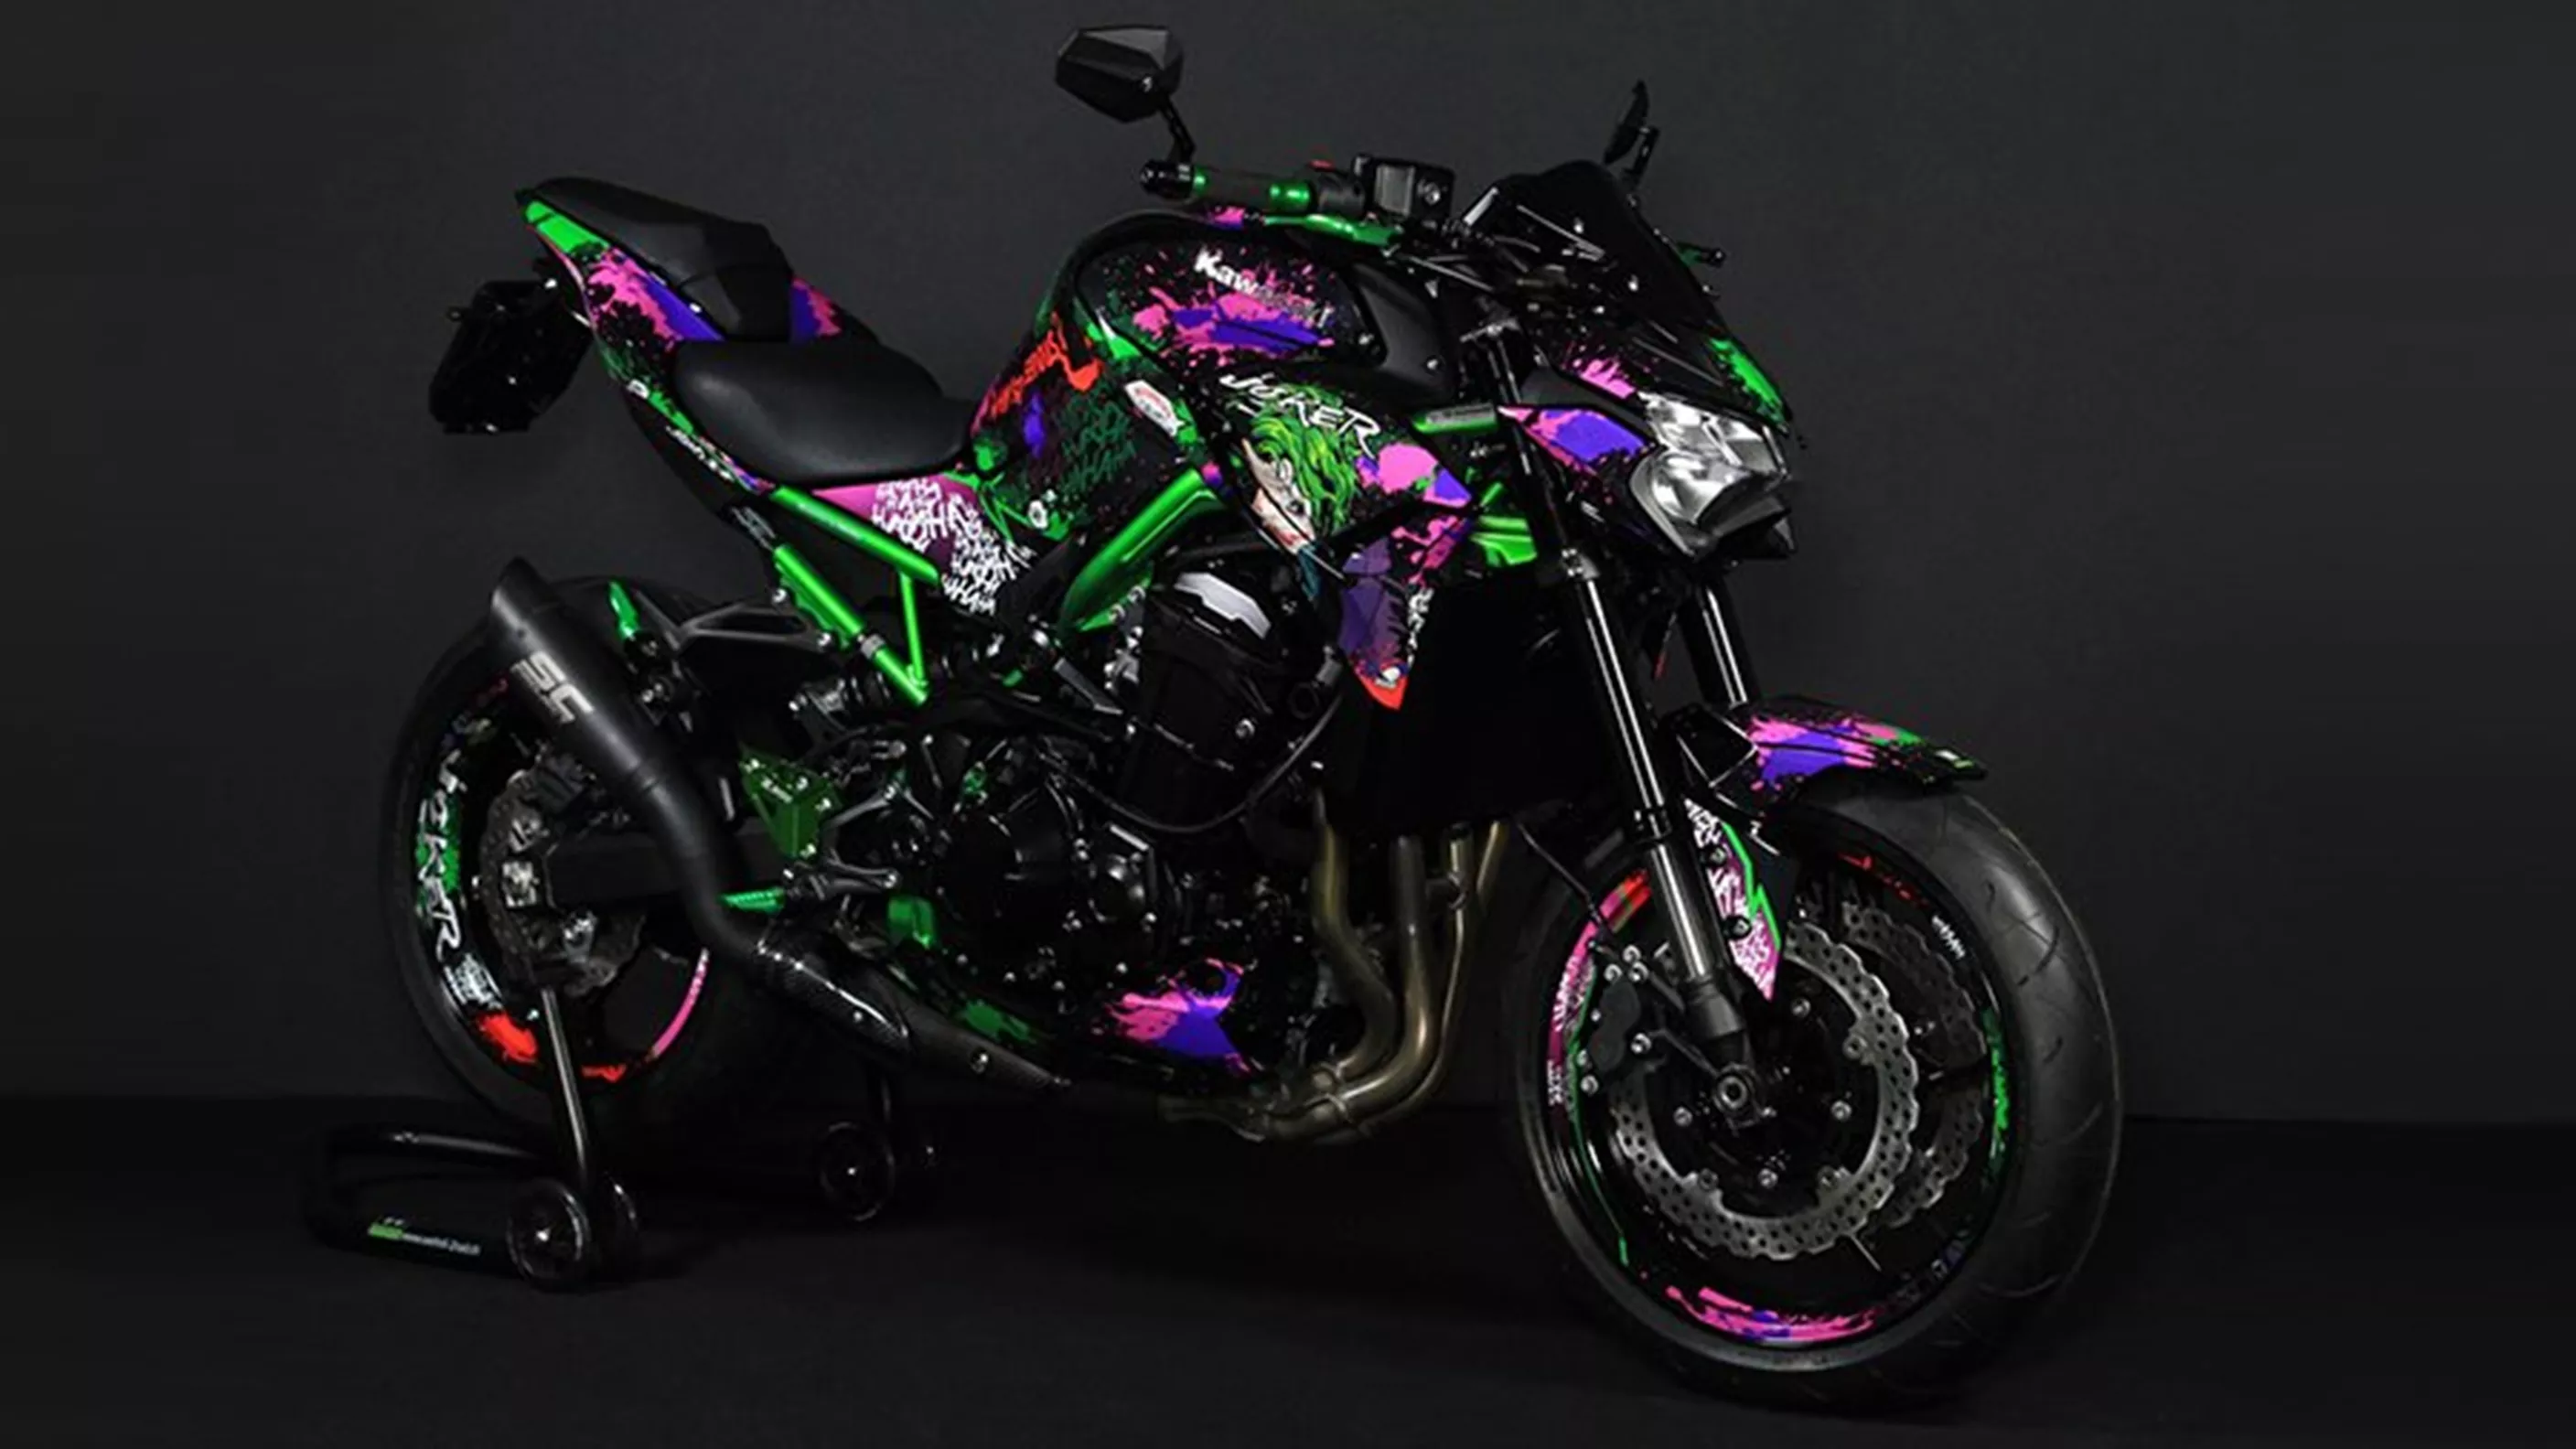 Motocykly Kawasaki na zakázku od Wehrli Design v obleku superhrdiny!